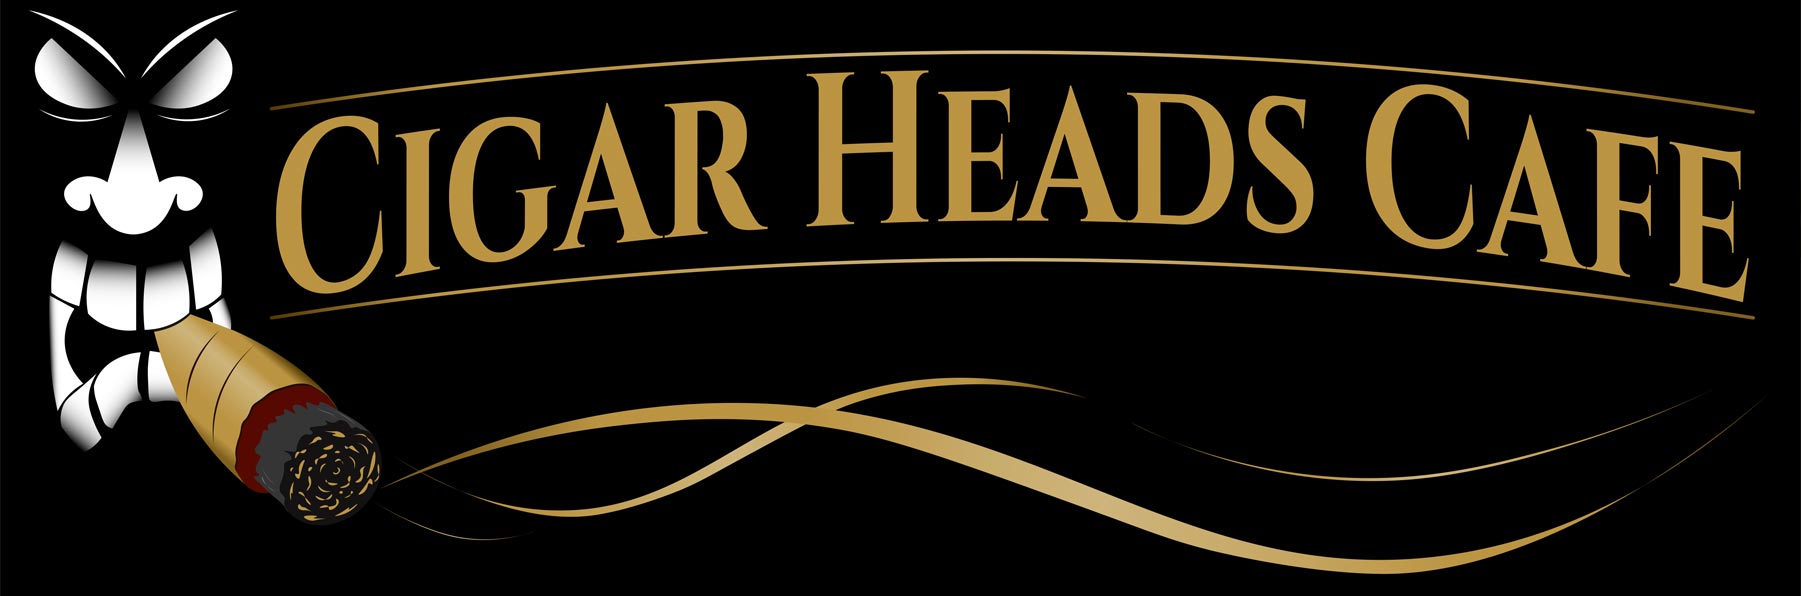 Cigar Heads Cafe Logo